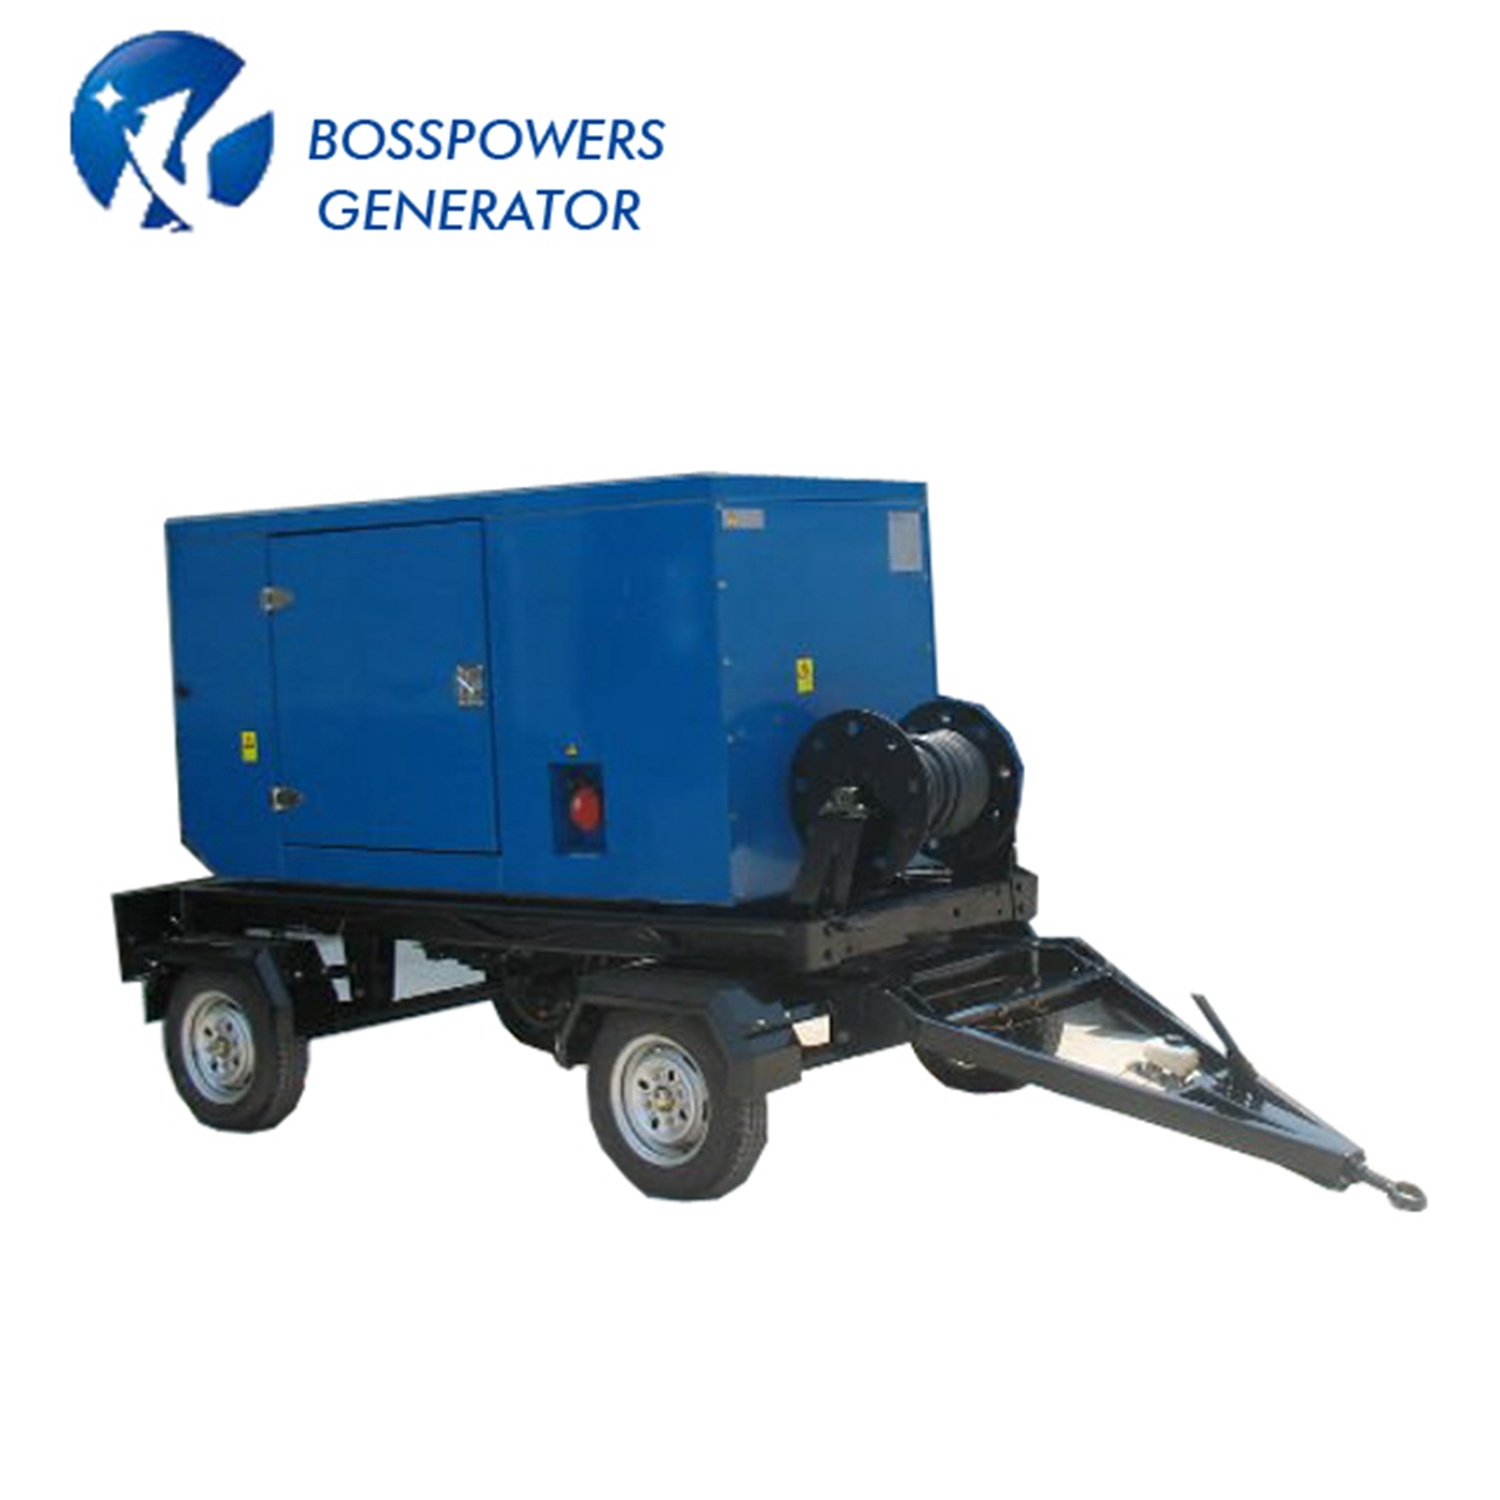 Four Wheels 24kw/30kVA Mobile Trailer Diesel Generator for Mining